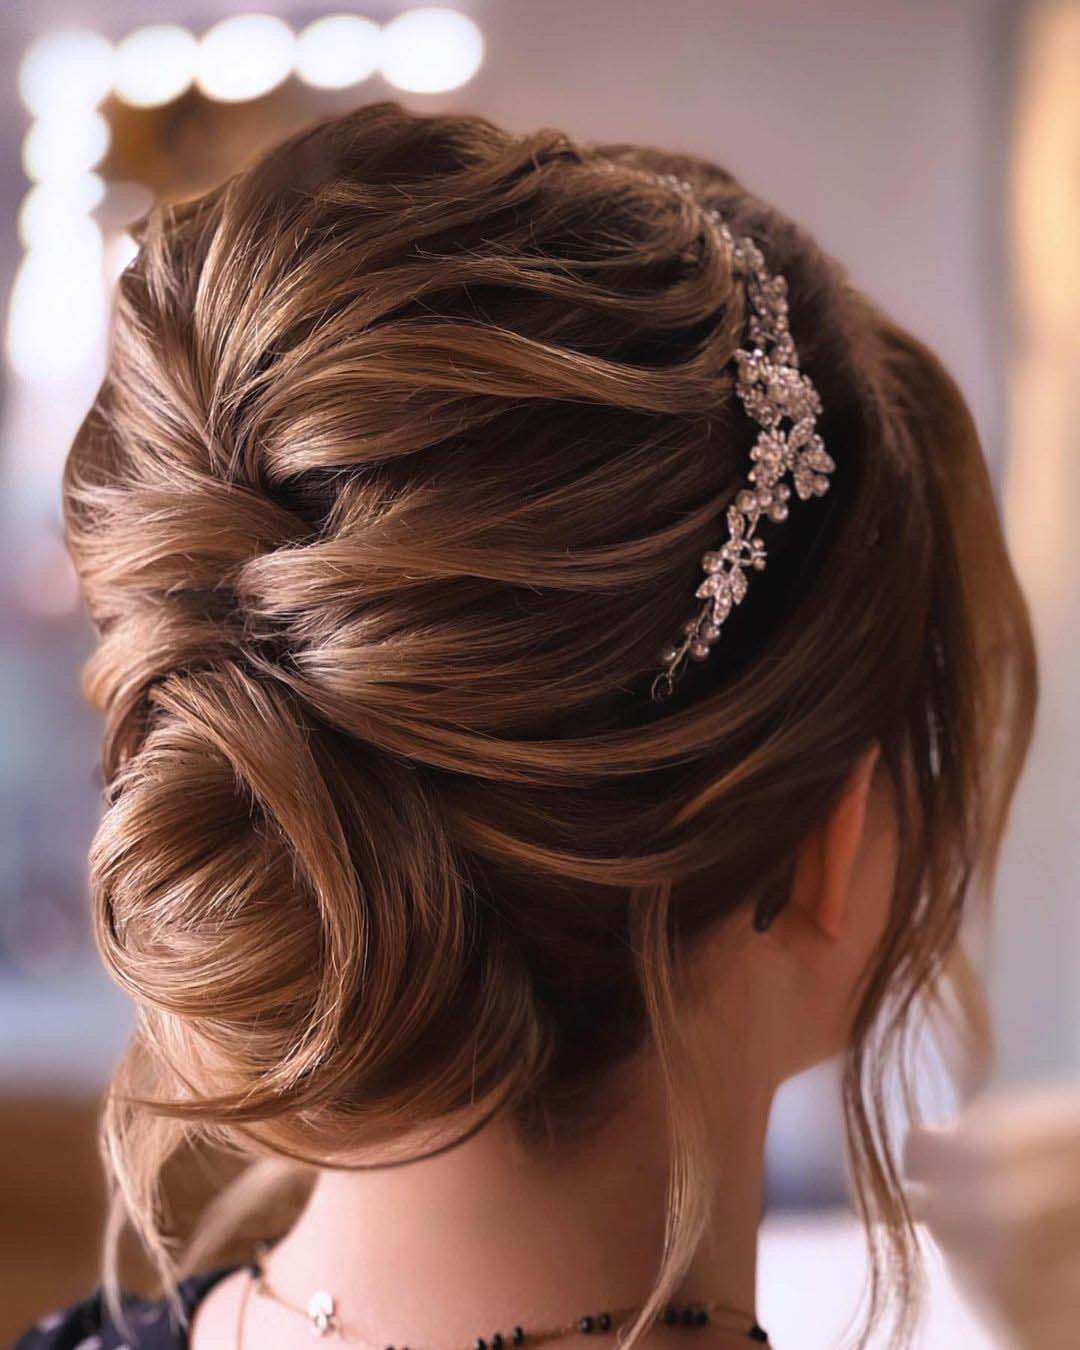 bridesmaid hairstyles updo with headband barbara.szuksztul.lenarczyk